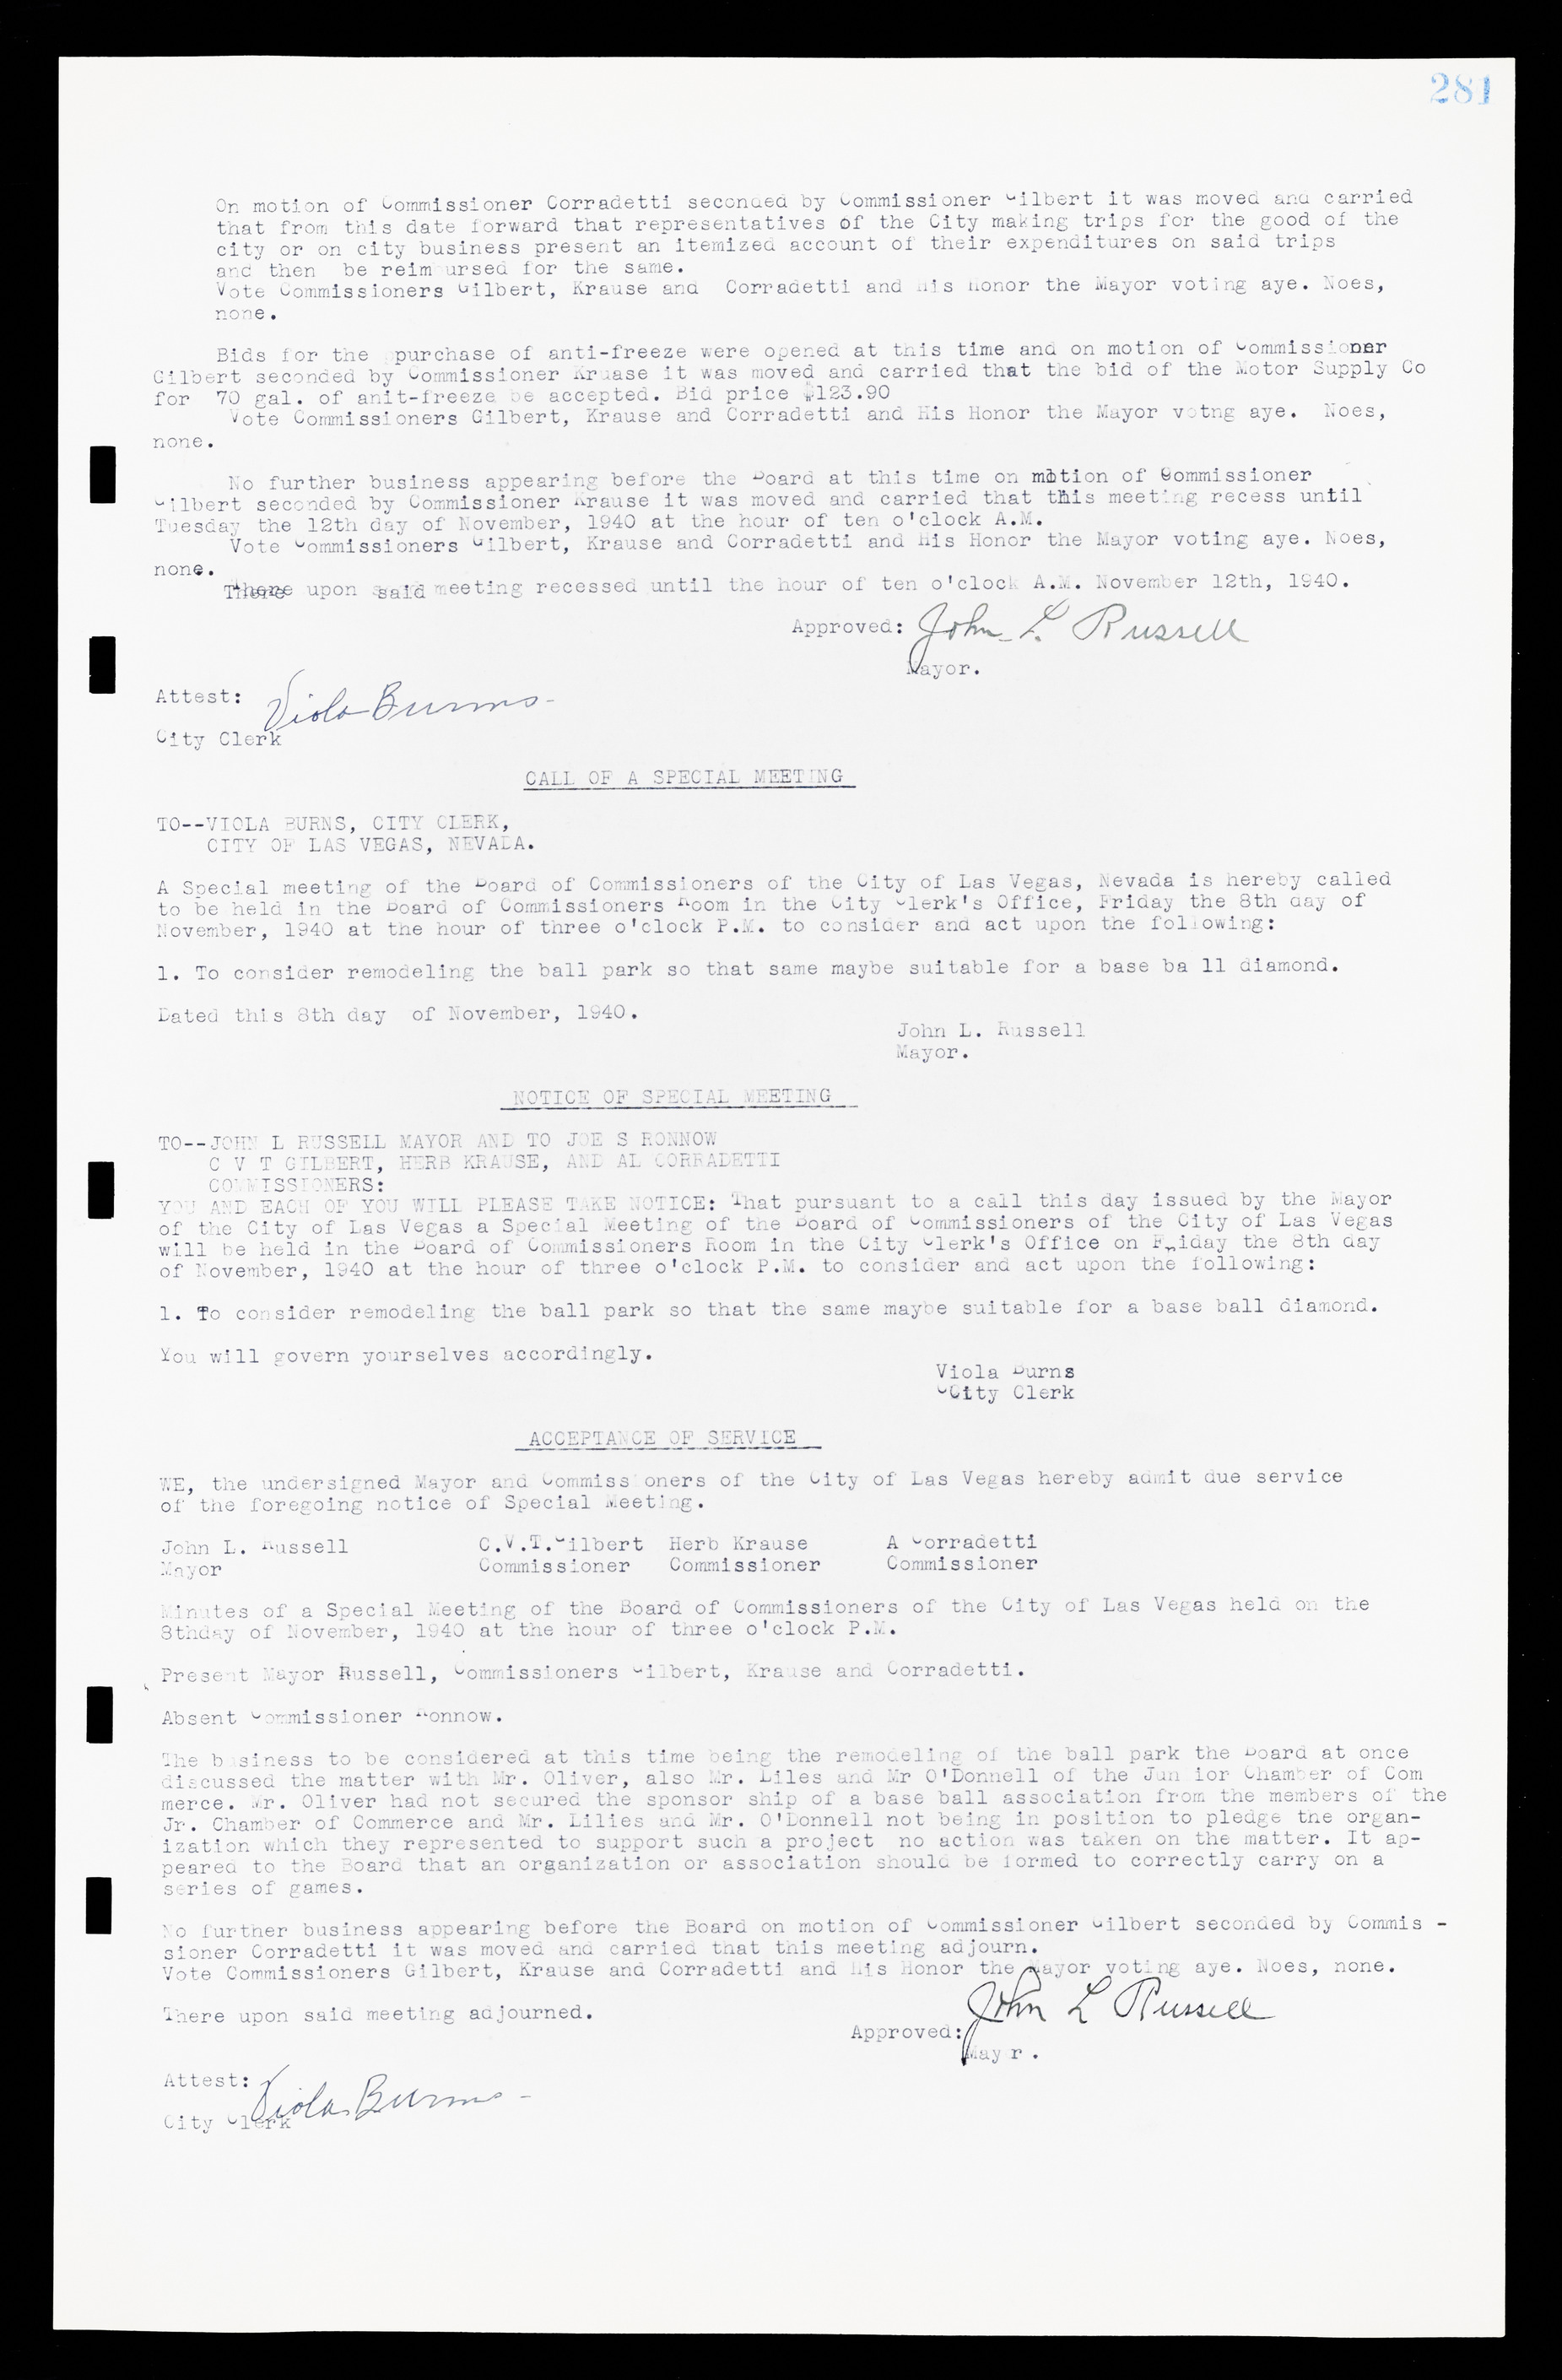 Las Vegas City Commission Minutes, February 17, 1937 to August 4, 1942, lvc000004-303